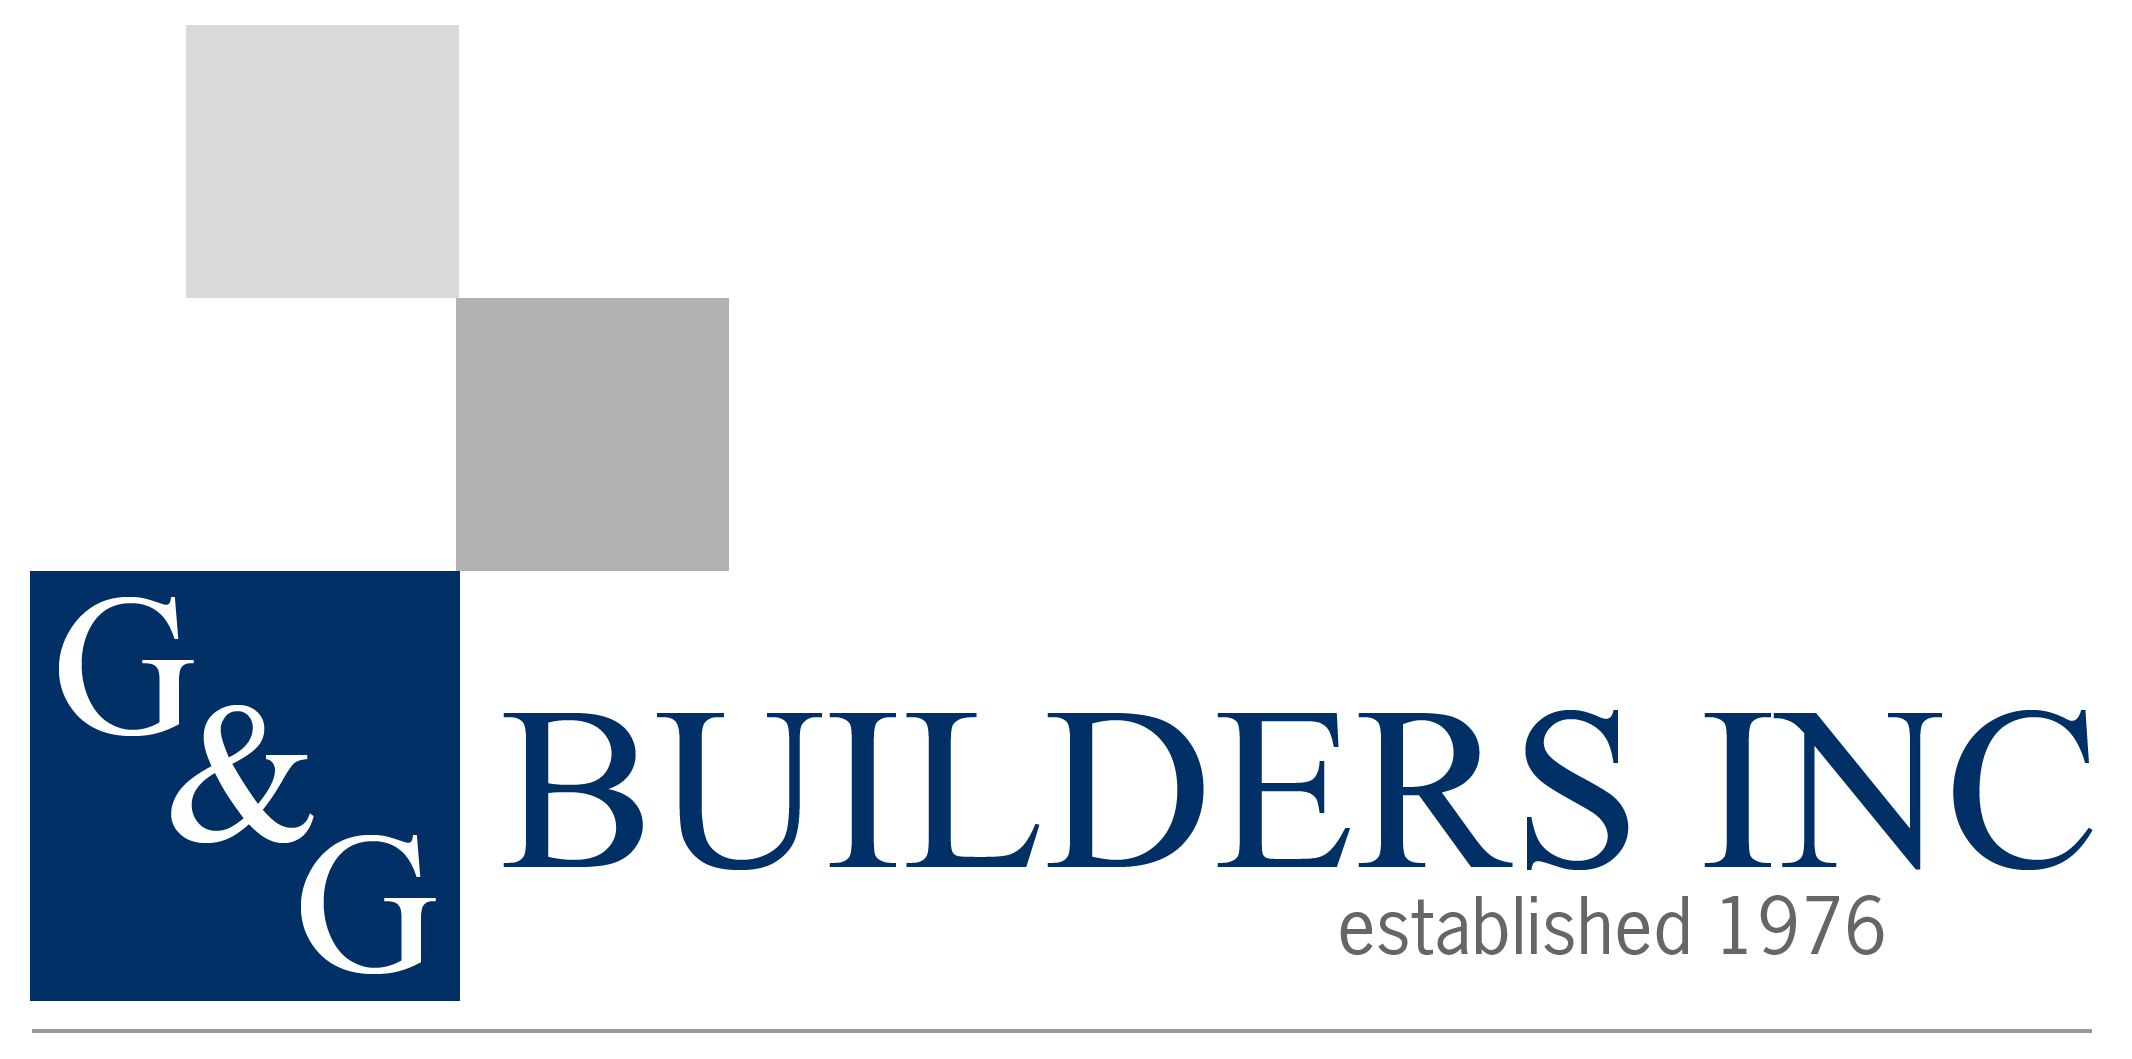 C & G Builders Inc